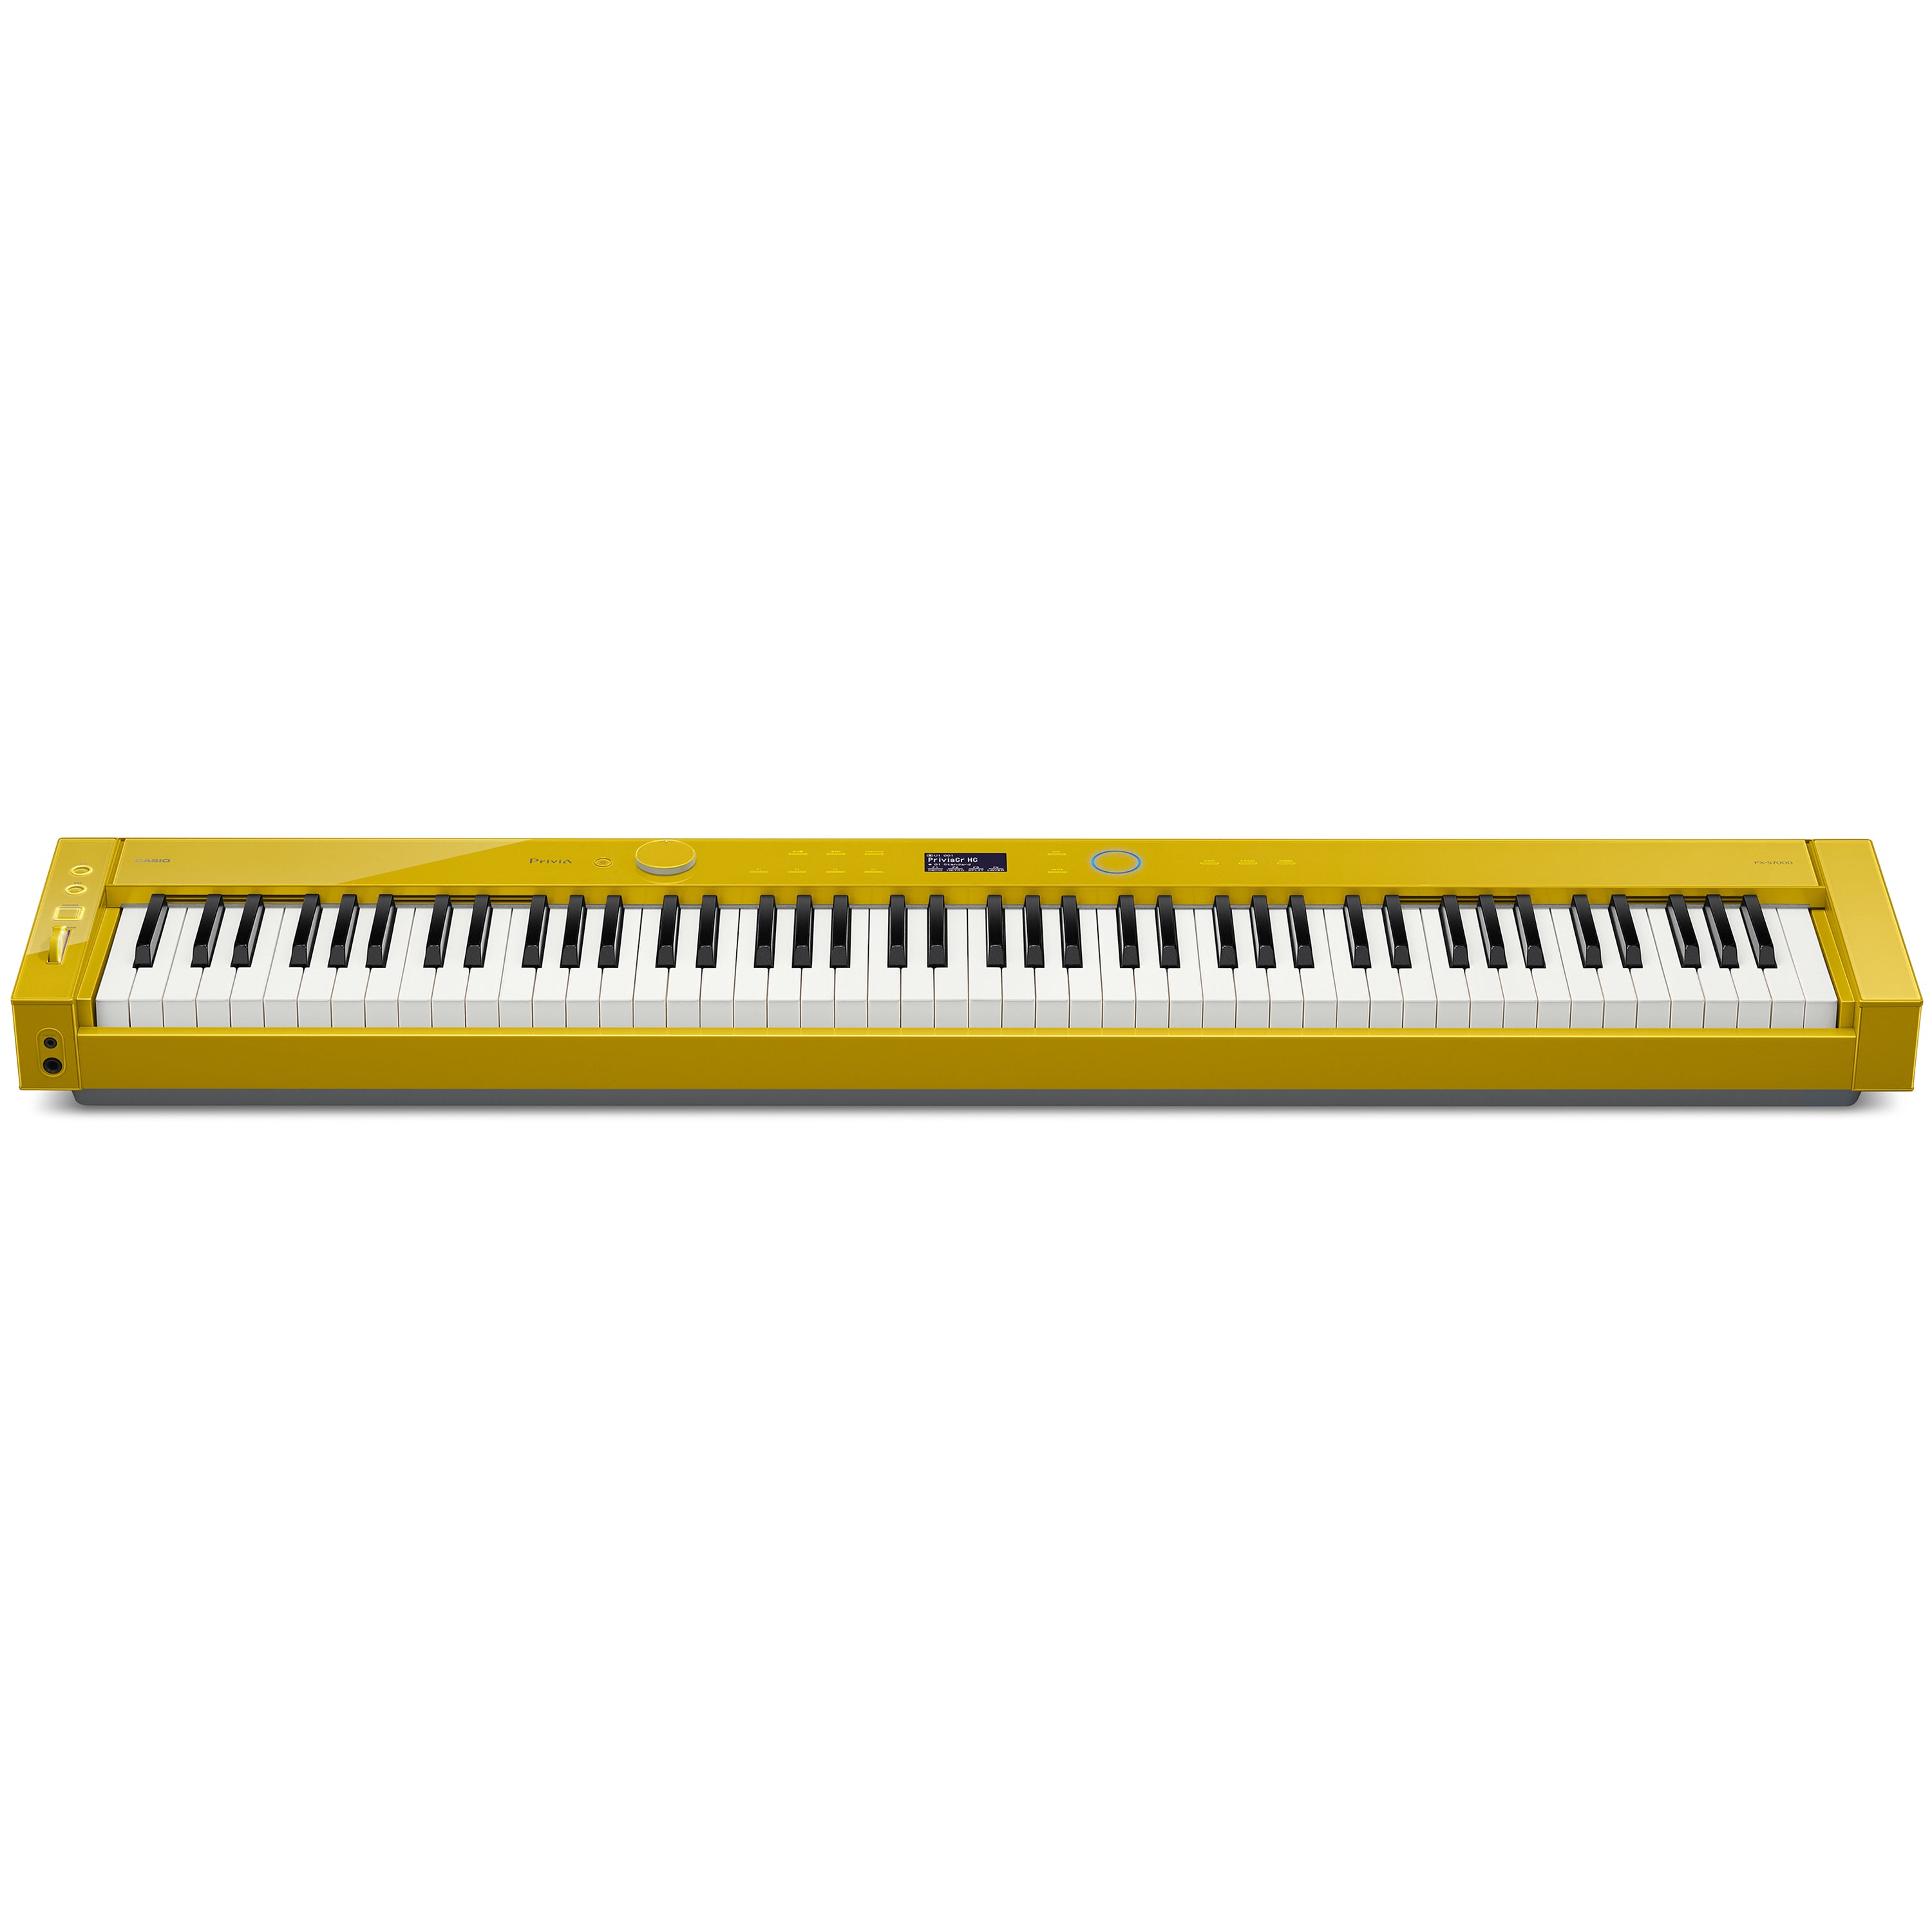 CASIO - Piano Numérique jaune Moutarde PX-S7000HMC7